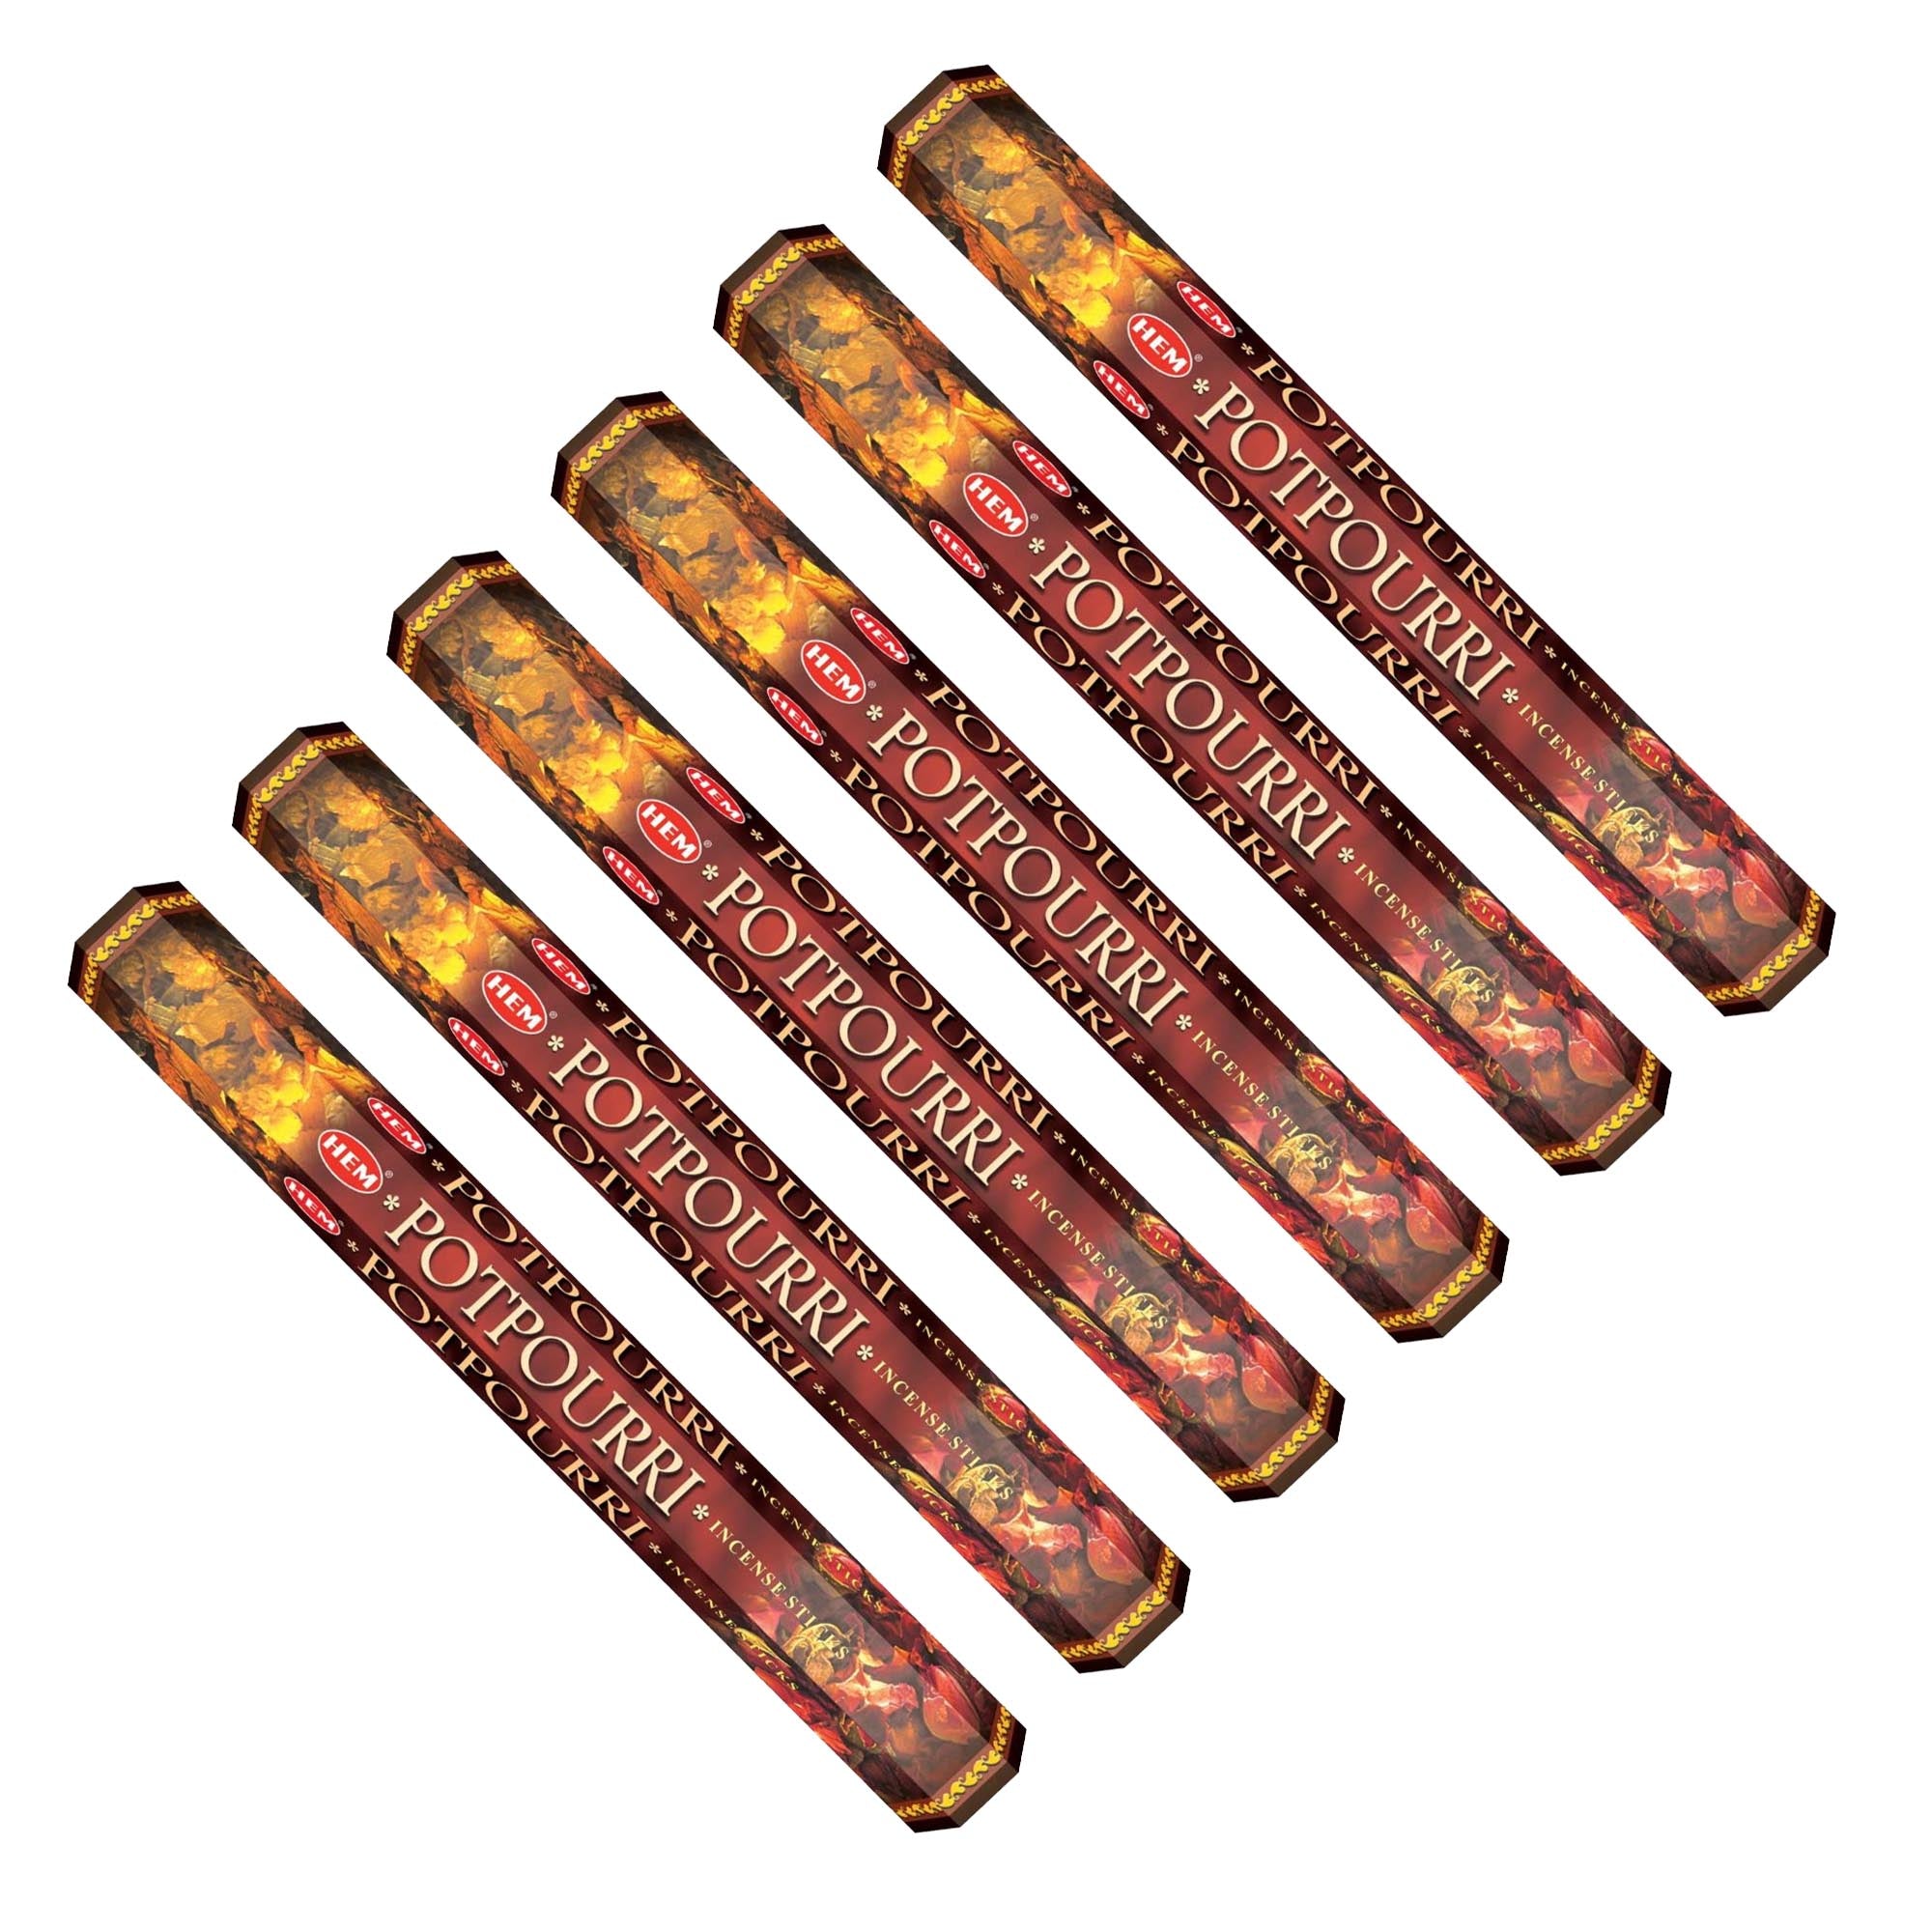 HEM - Hexagon - Potpourri Incense Sticks